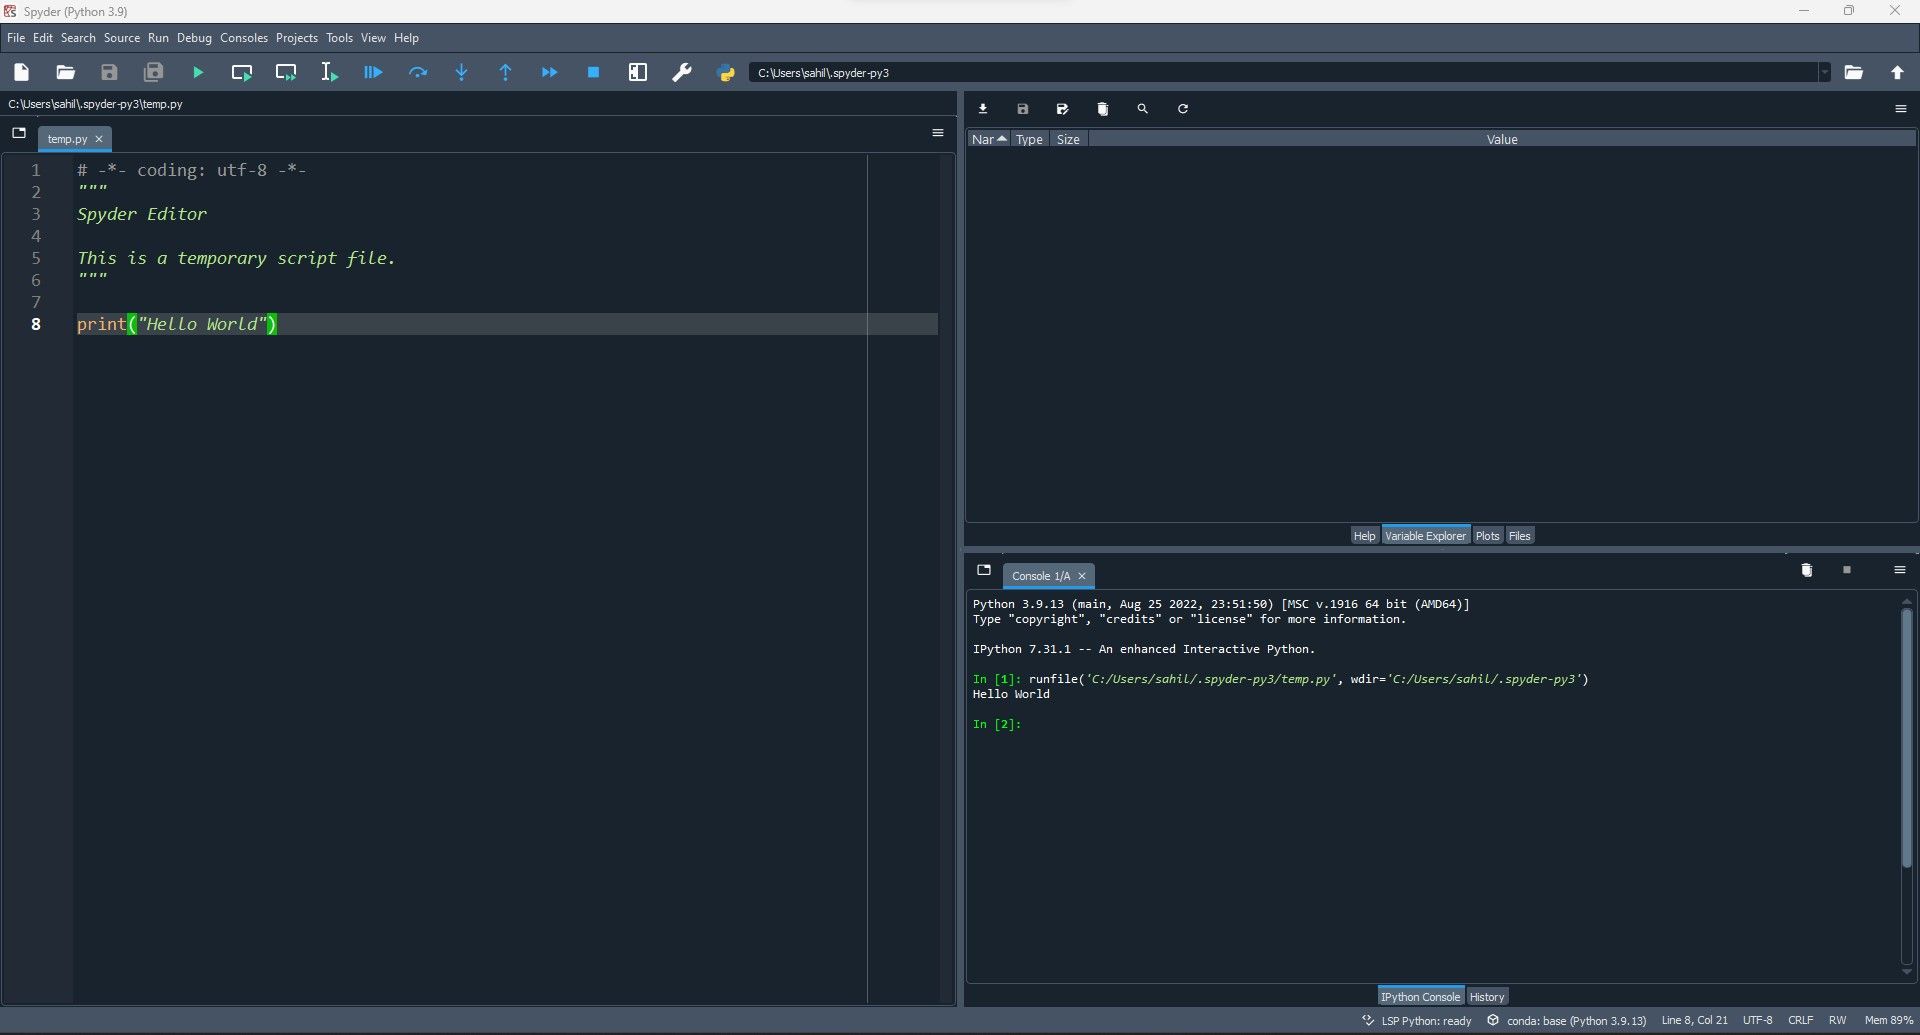 Spyder coding editor window interface